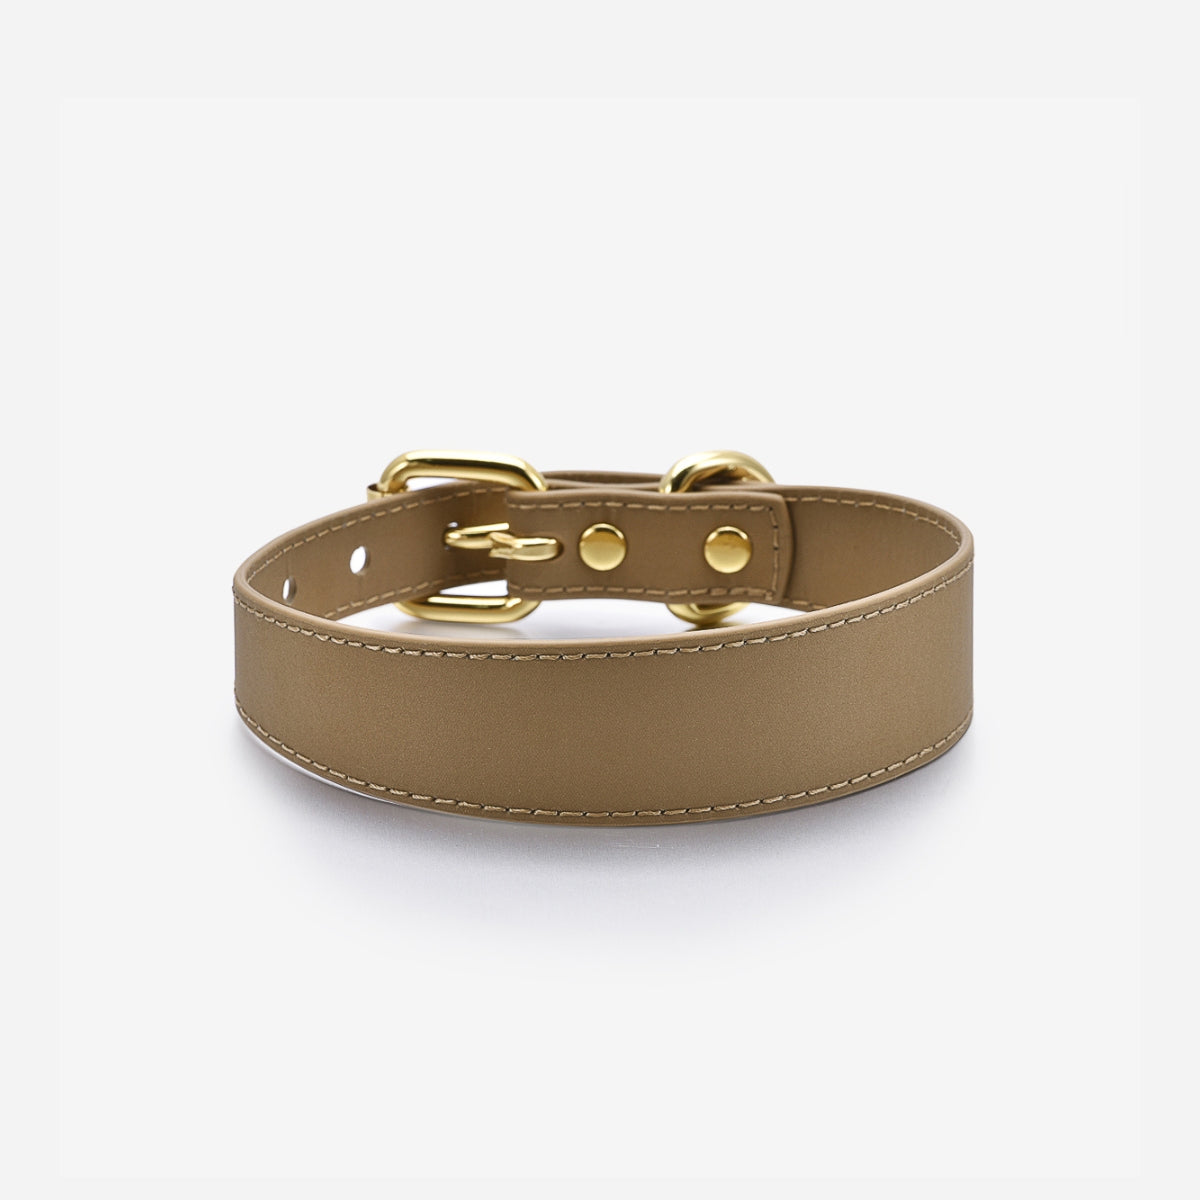 reflective-bronze-dog-collar-medium-thin.jpg